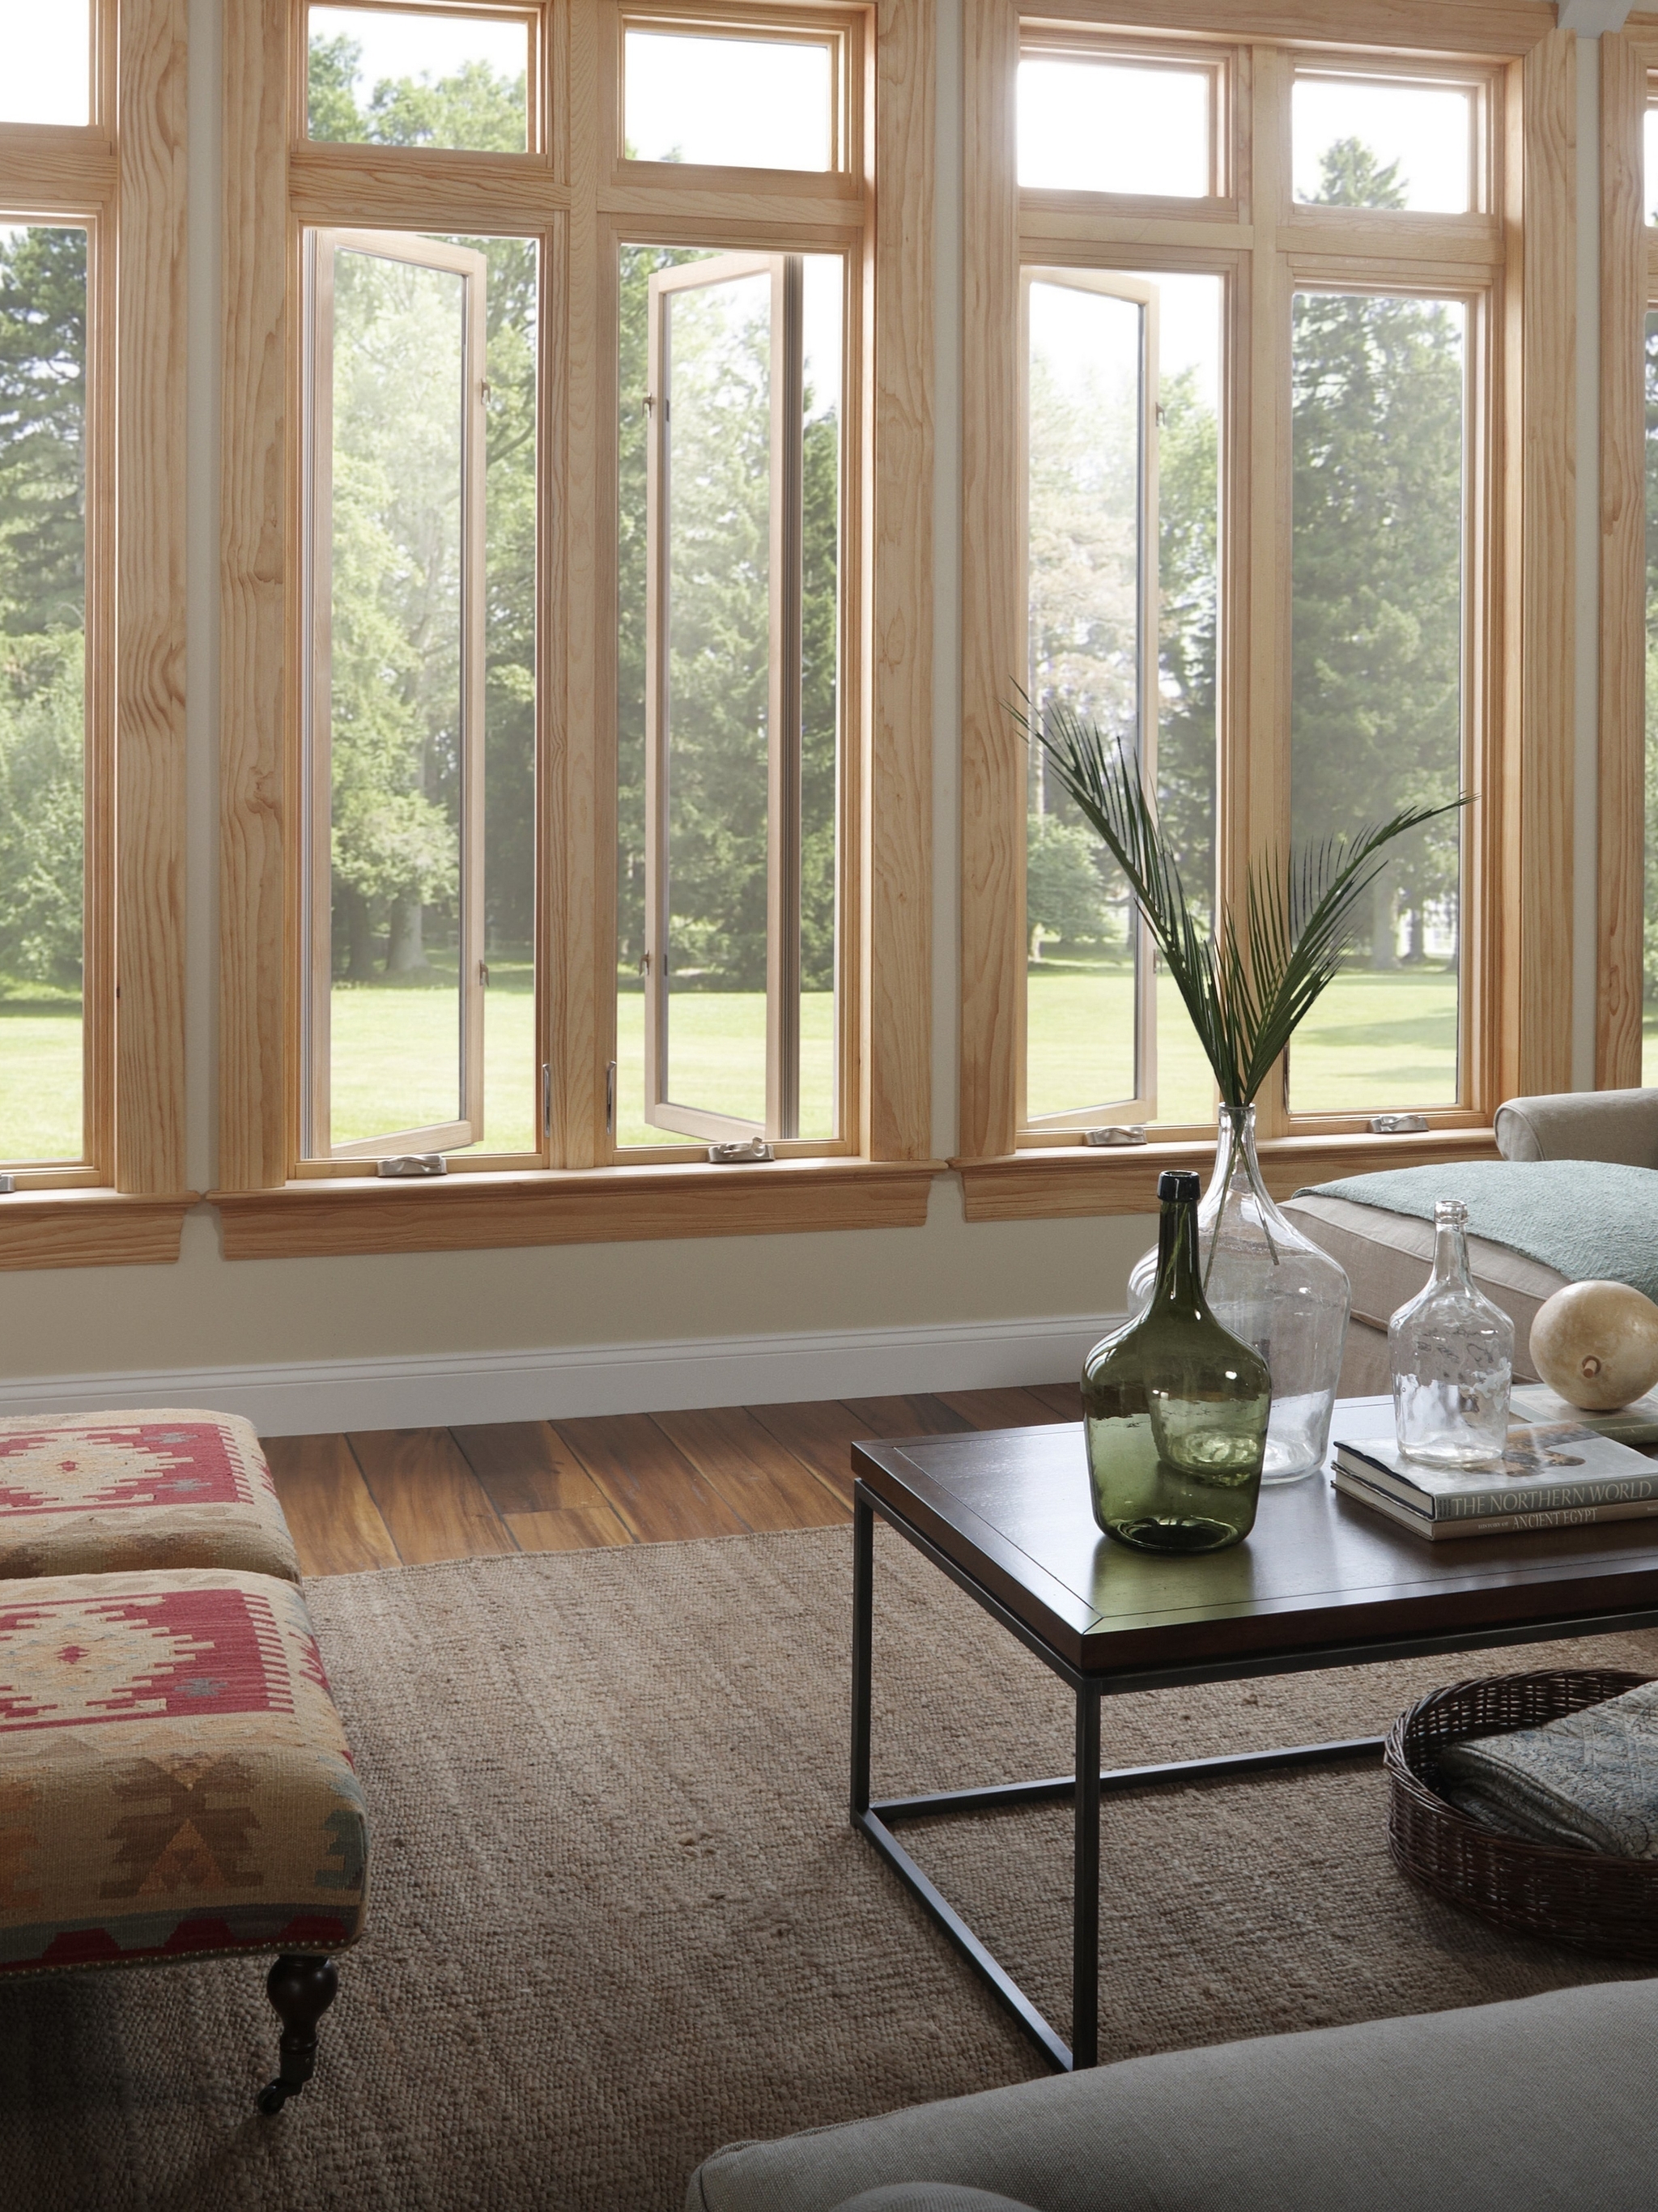 Image: Room, wooden windows, furniture, fireplace, carpet, table, design